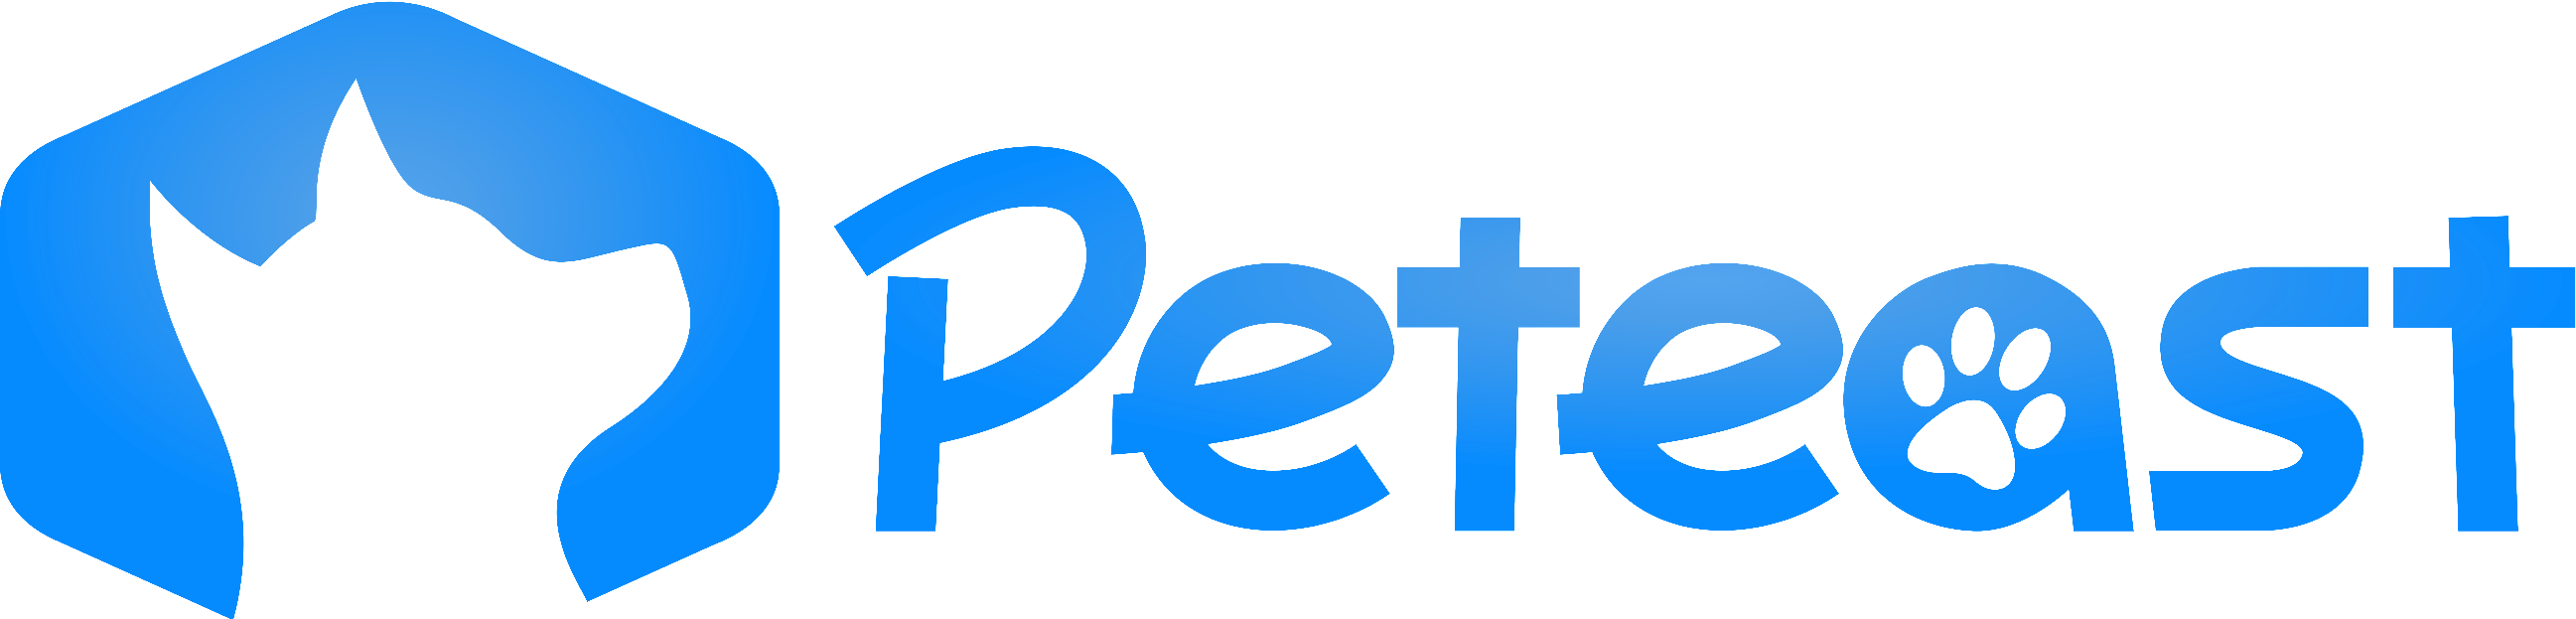 Peteast_logo-1